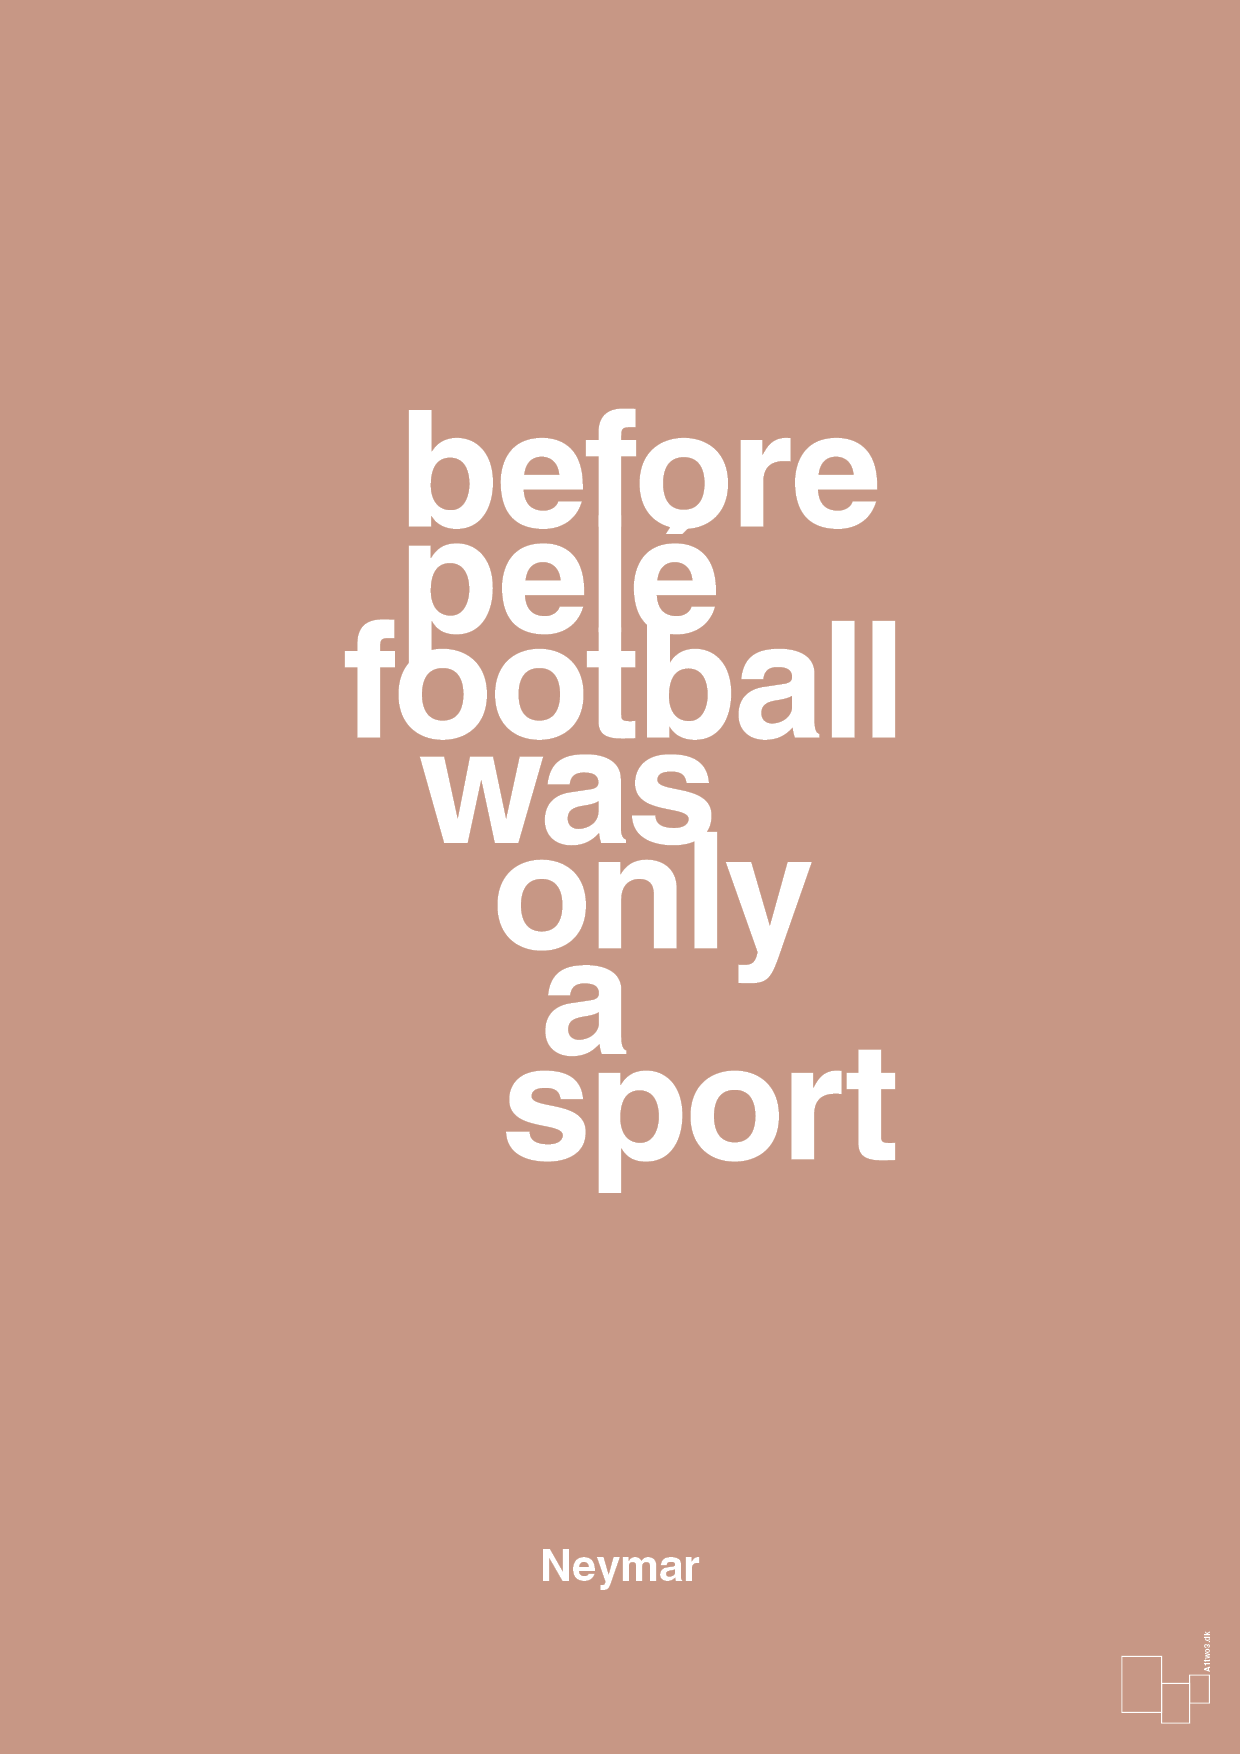 before pelé football was only a sport - Plakat med Citater i Powder